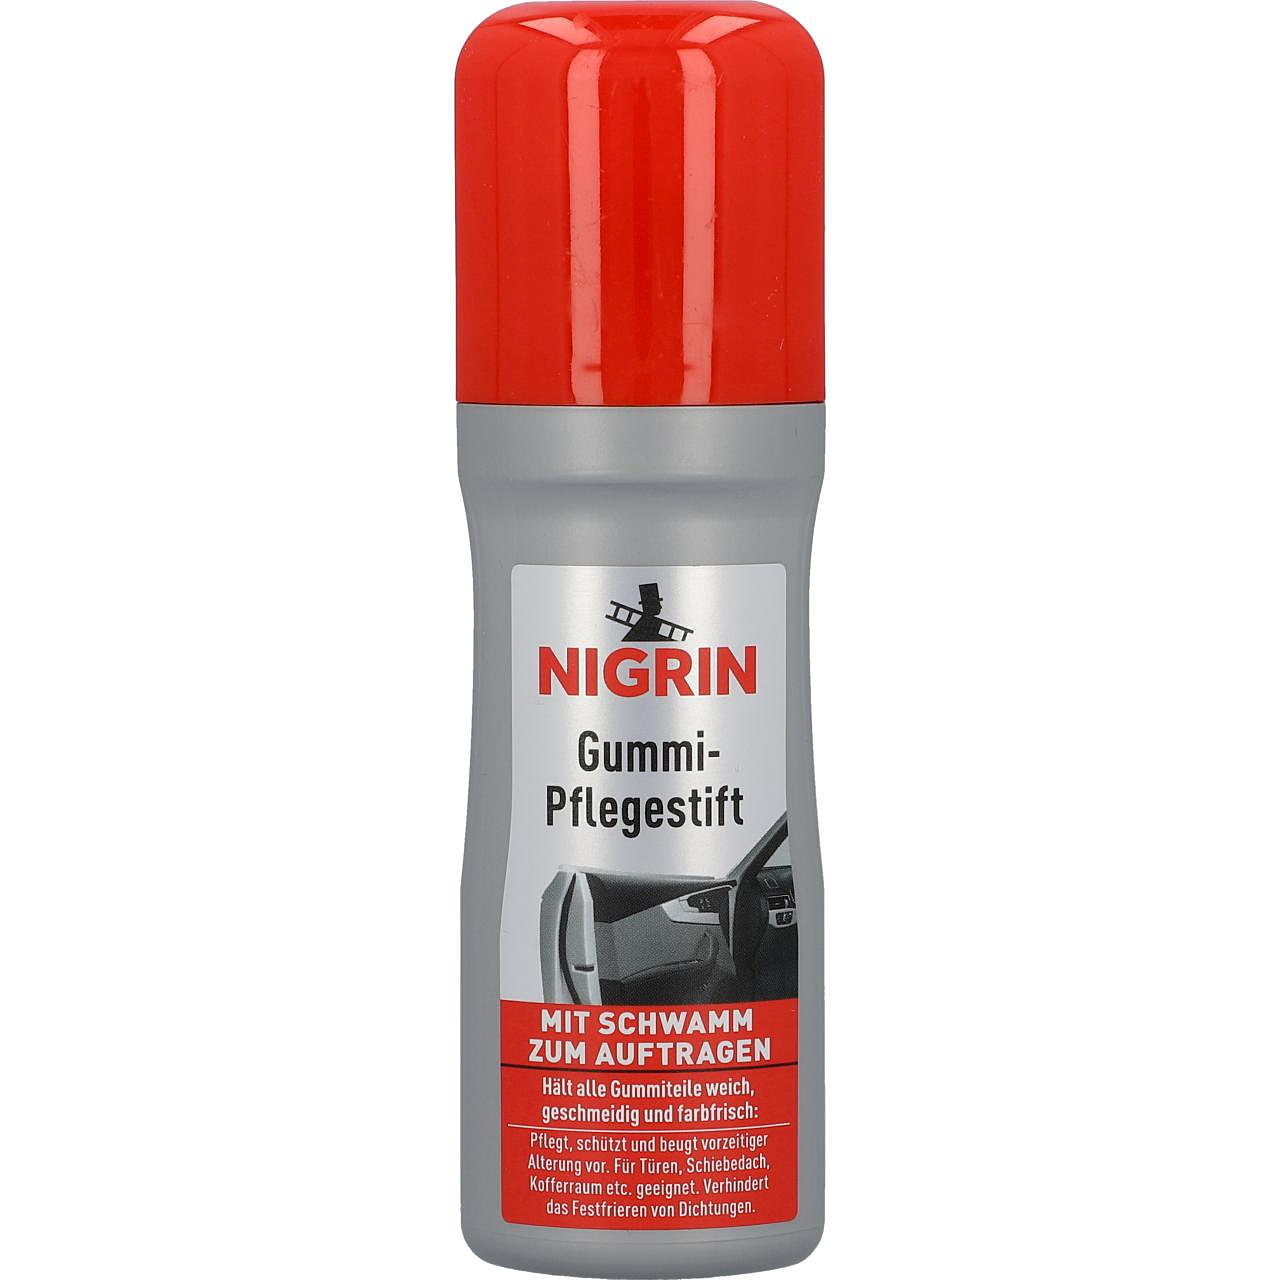 NIGRIN Gummipflege-Stift 75 ml